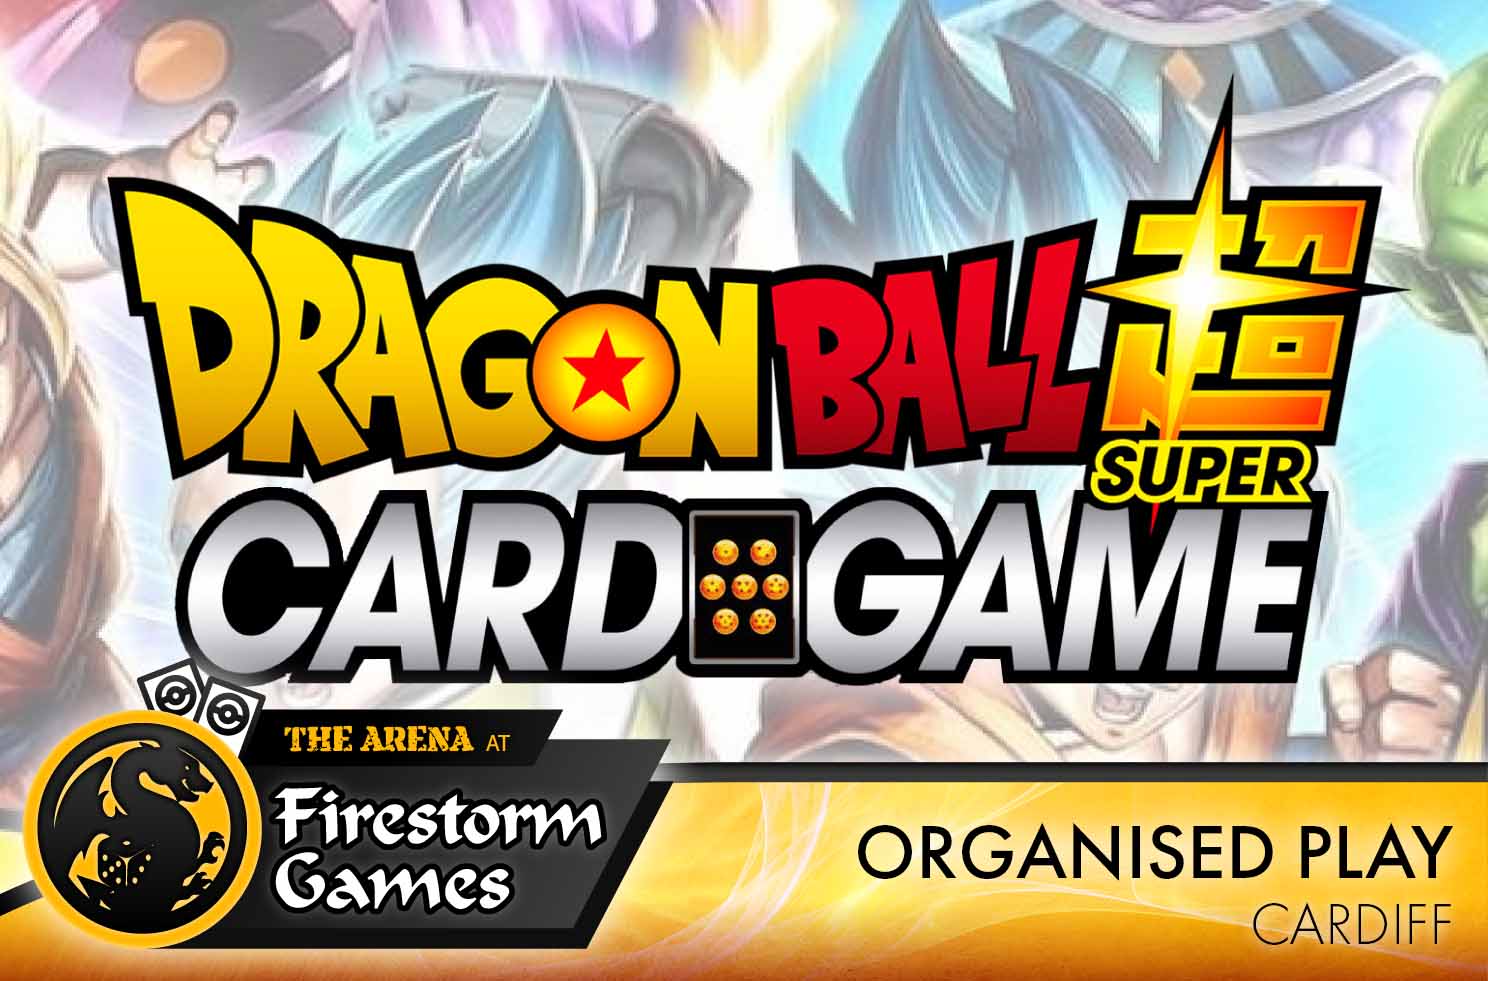 DragonBall Super CG Tuesday Organised Play